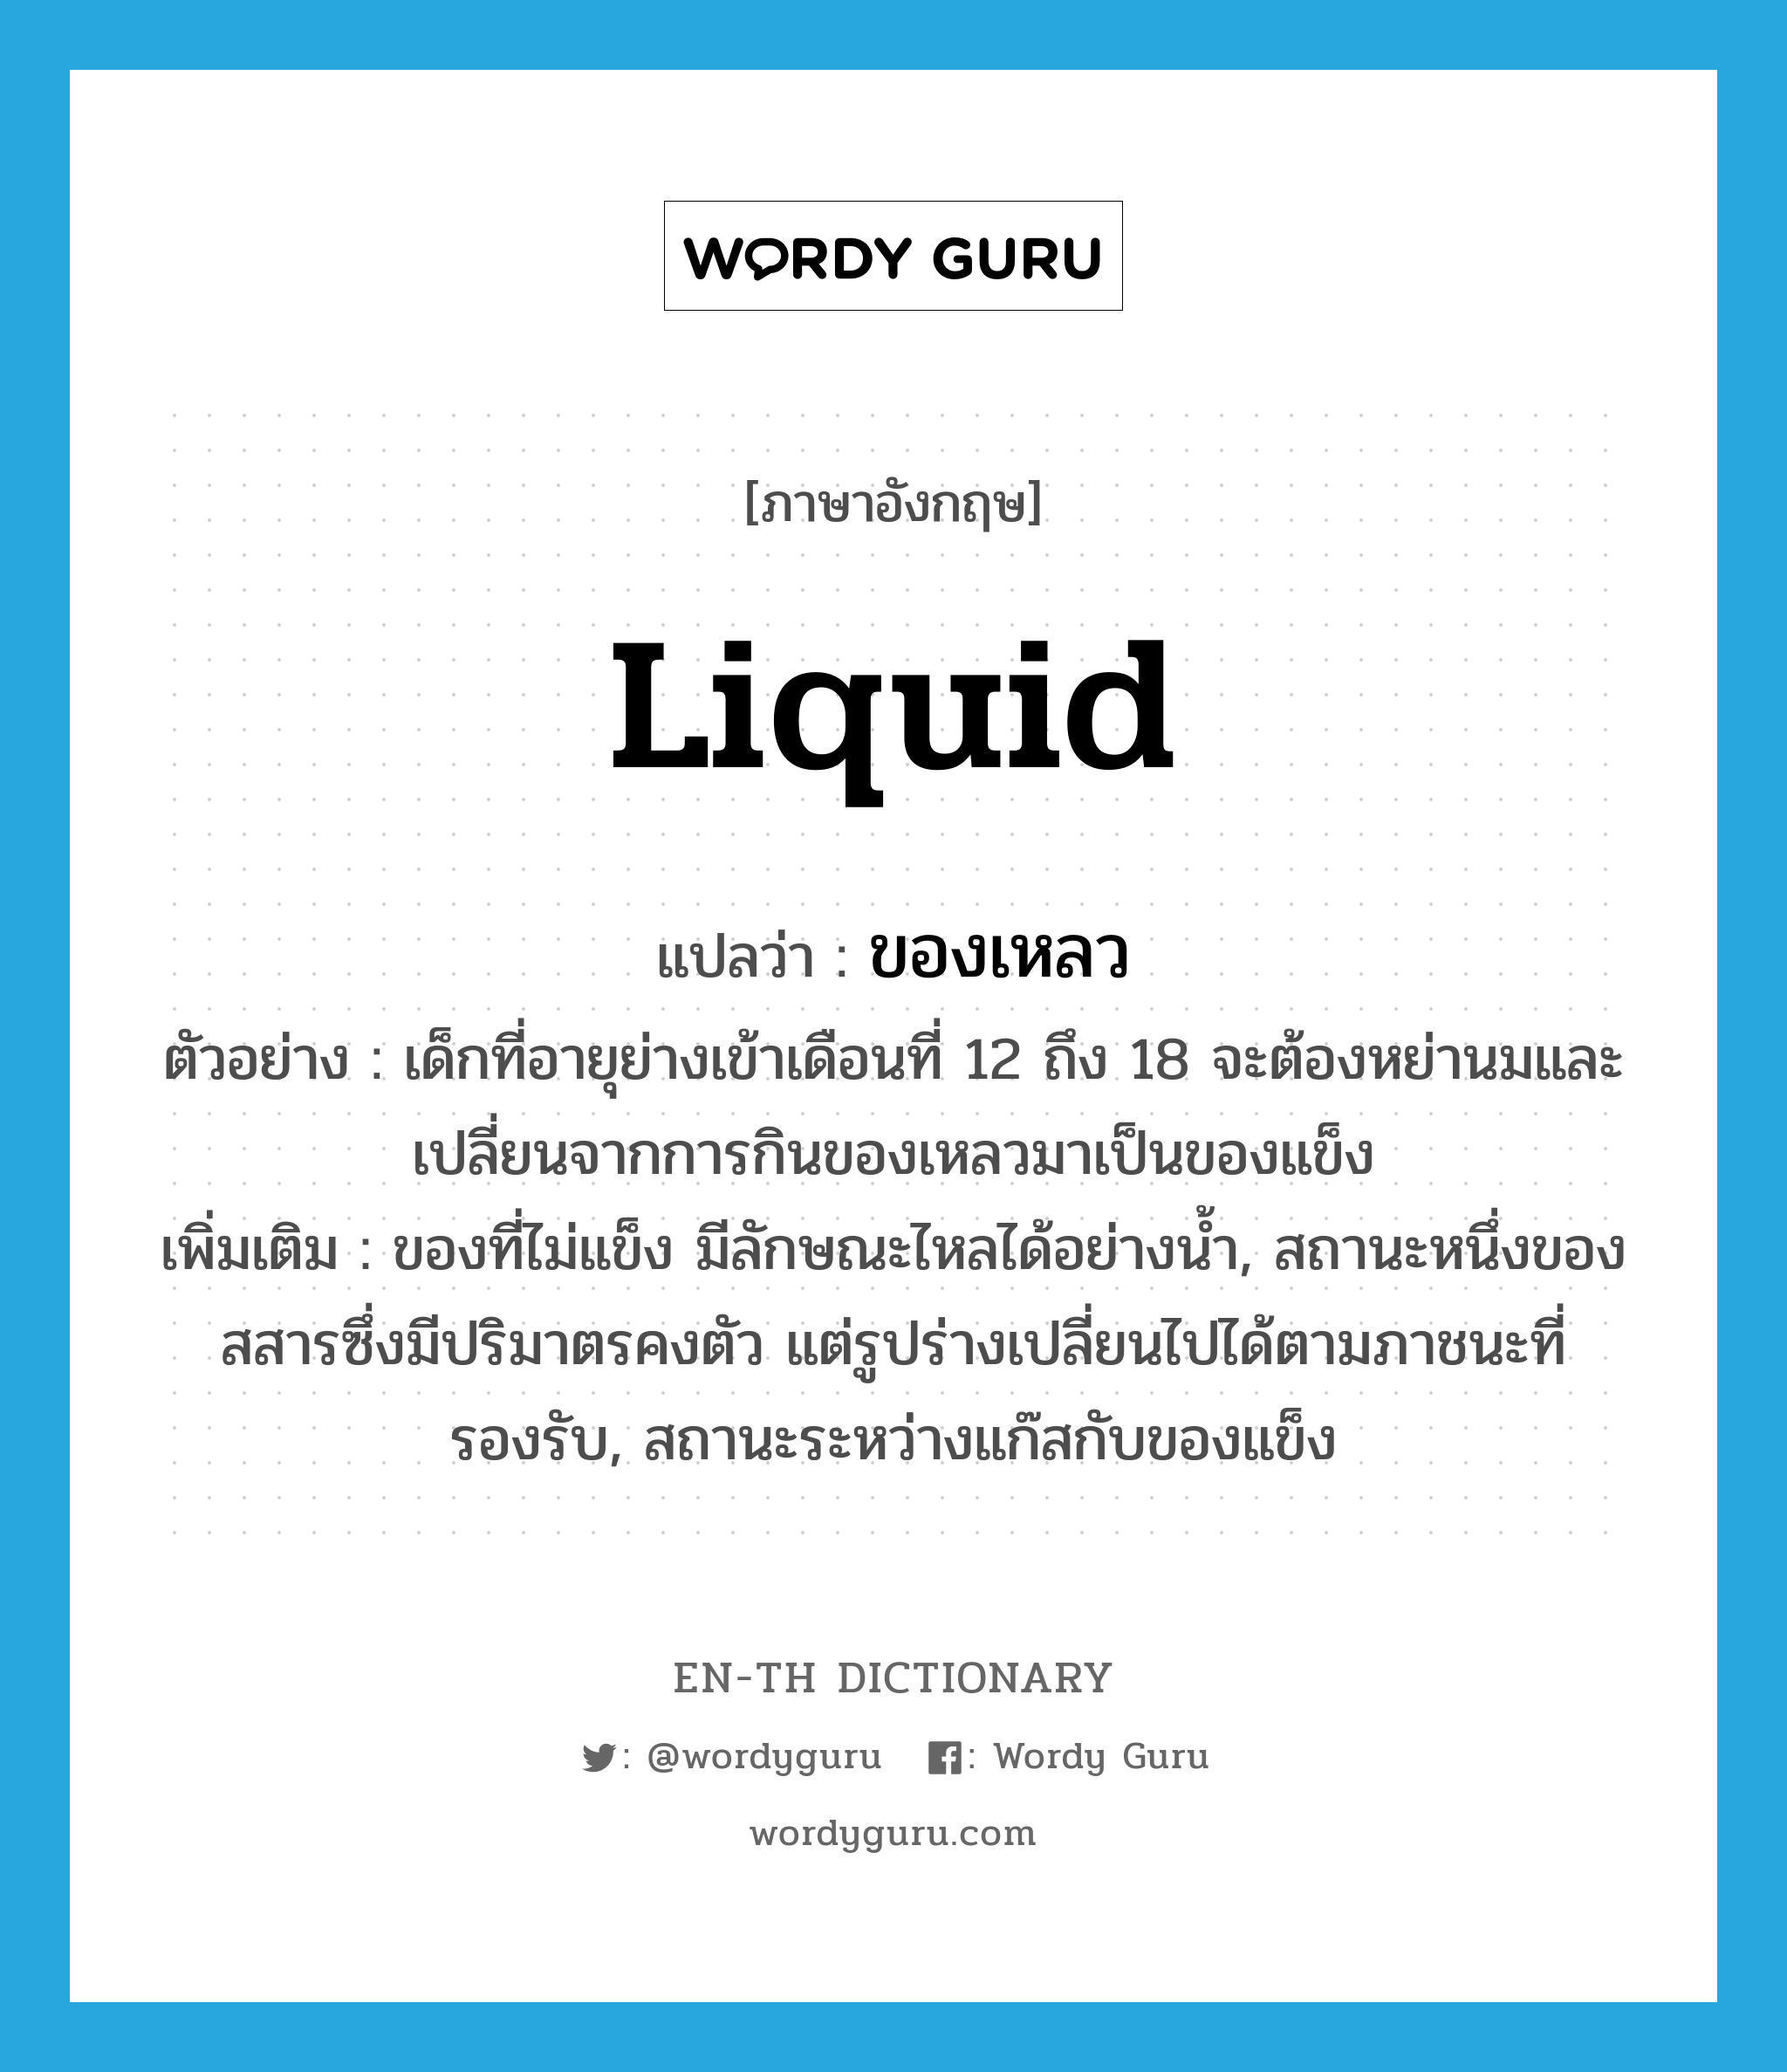 liquid แปลว่า?, คำศัพท์ภาษาอังกฤษ liquid แปลว่า ของเหลว ประเภท N ตัวอย่าง เด็กที่อายุย่างเข้าเดือนที่ 12 ถึง 18 จะต้องหย่านมและเปลี่ยนจากการกินของเหลวมาเป็นของแข็ง เพิ่มเติม ของที่ไม่แข็ง มีลักษณะไหลได้อย่างน้ำ, สถานะหนึ่งของสสารซึ่งมีปริมาตรคงตัว แต่รูปร่างเปลี่ยนไปได้ตามภาชนะที่รองรับ, สถานะระหว่างแก๊สกับของแข็ง หมวด N